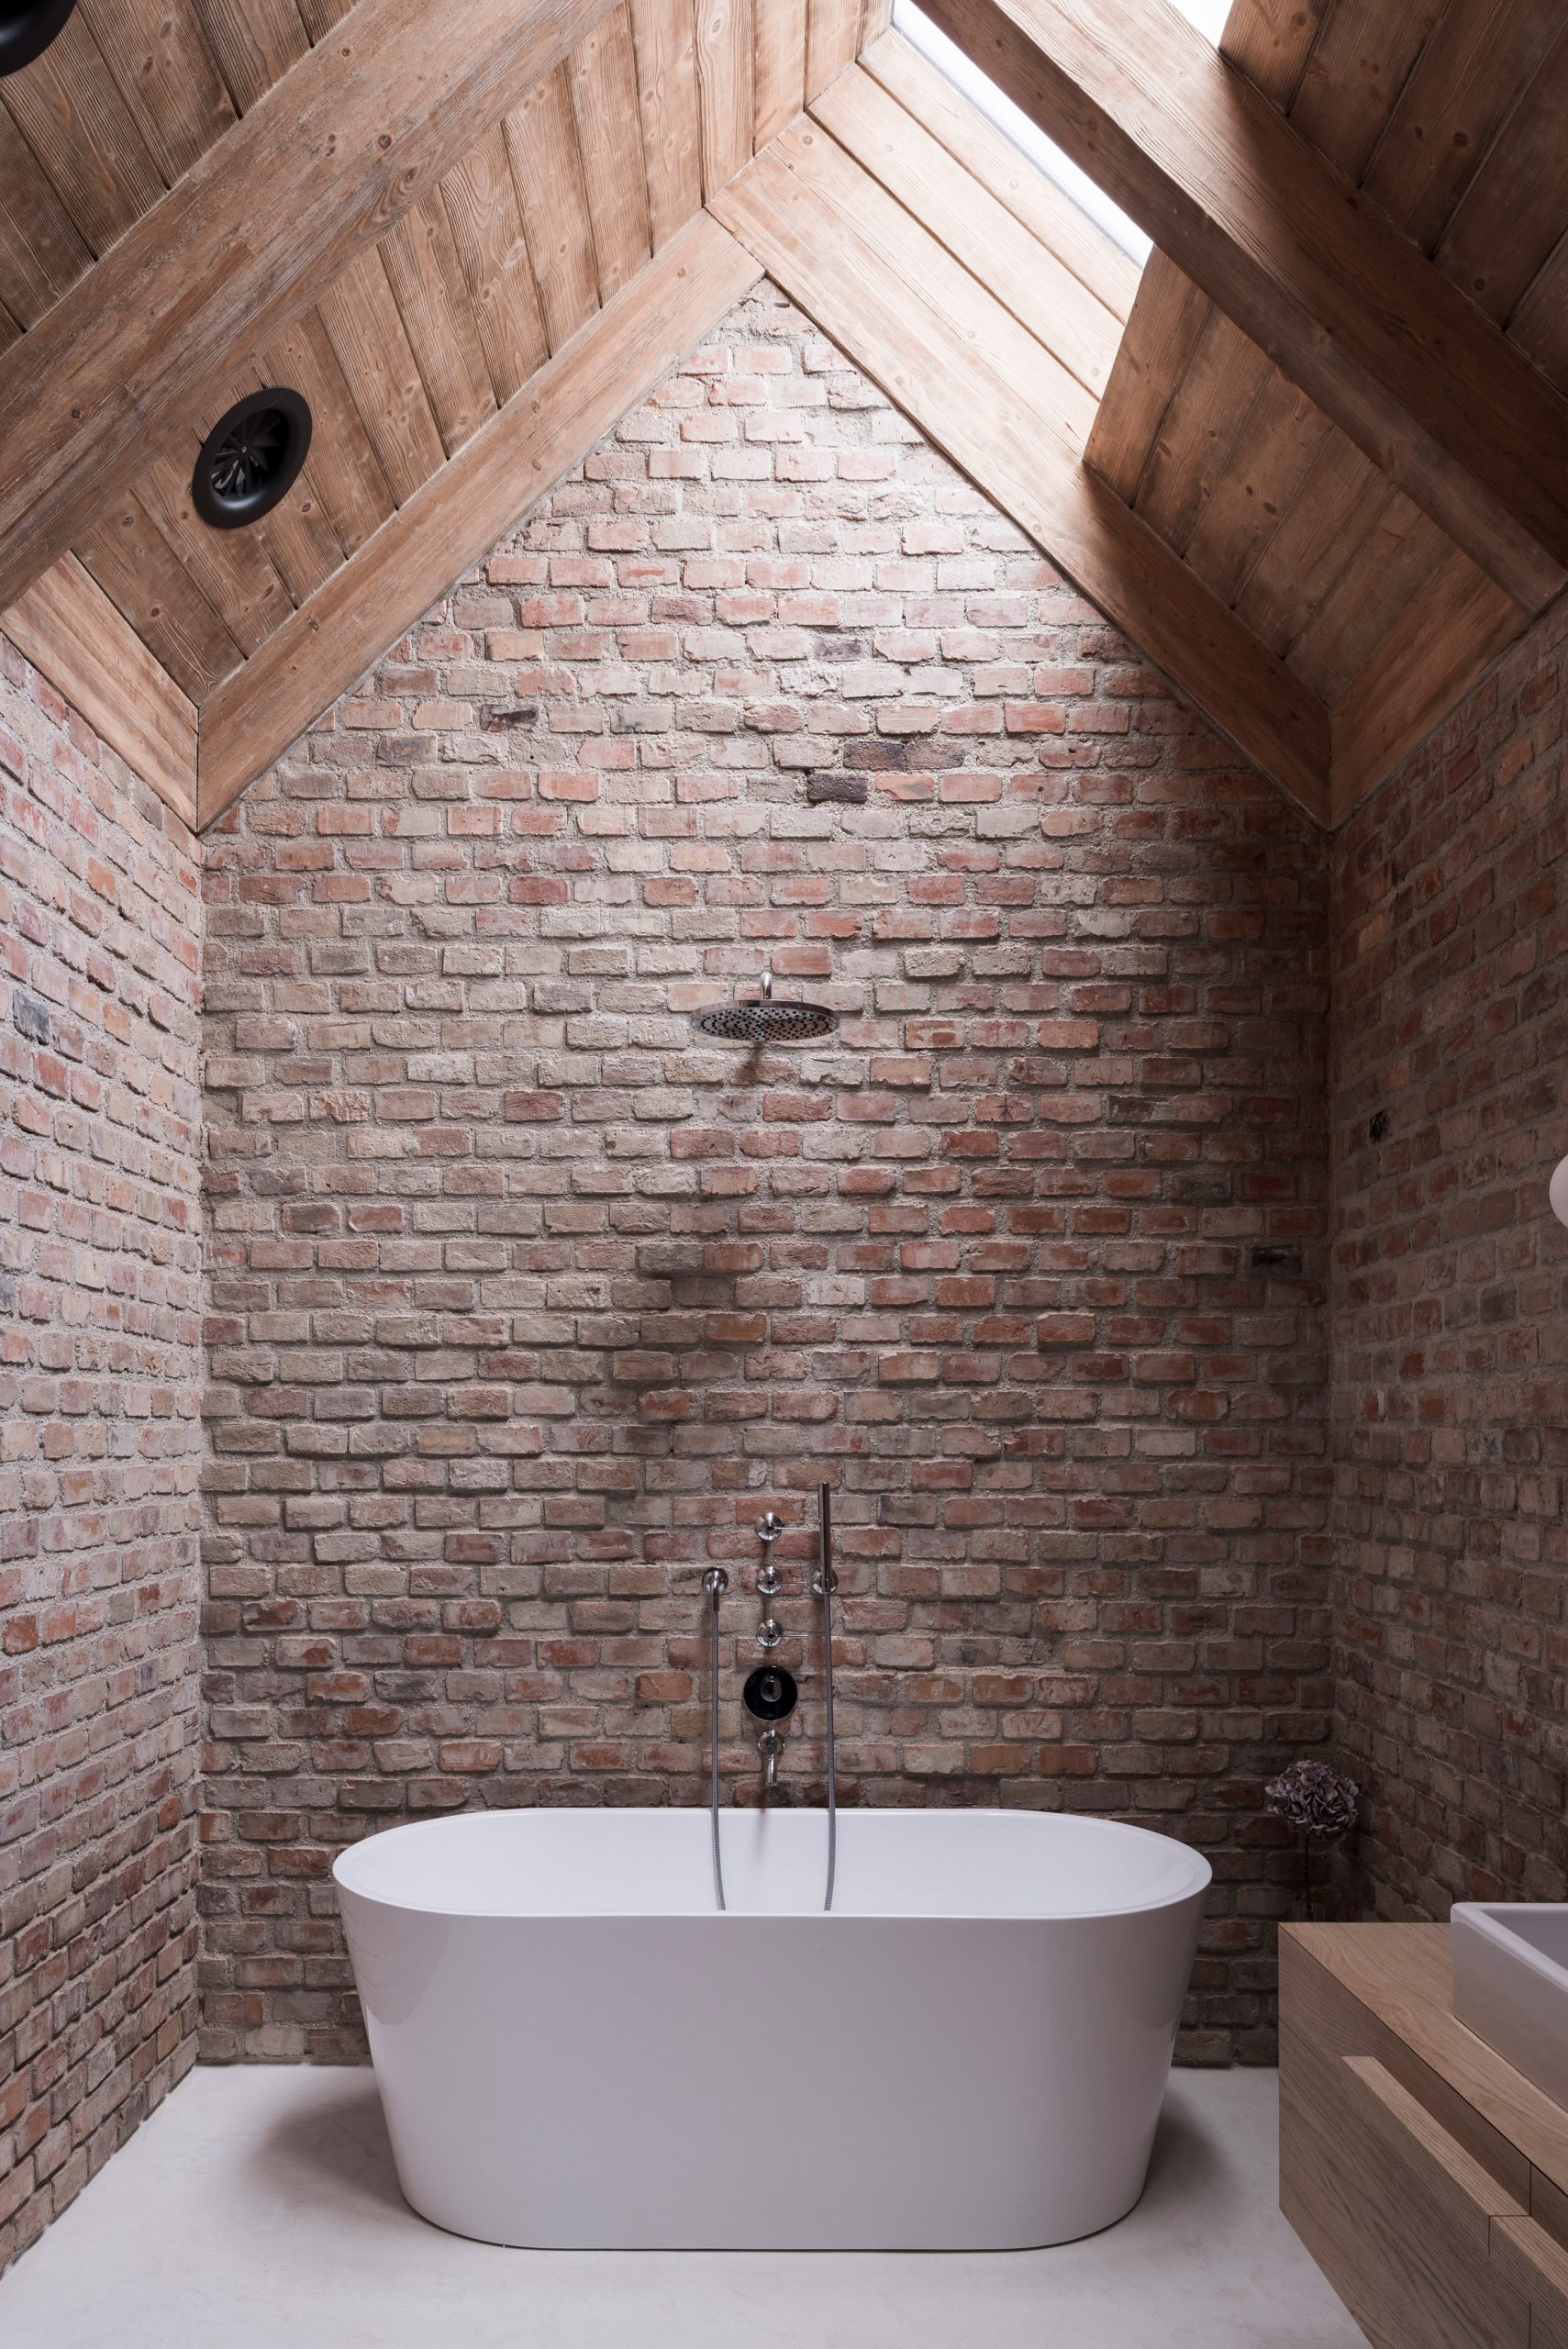 Exposed-brick bathroom